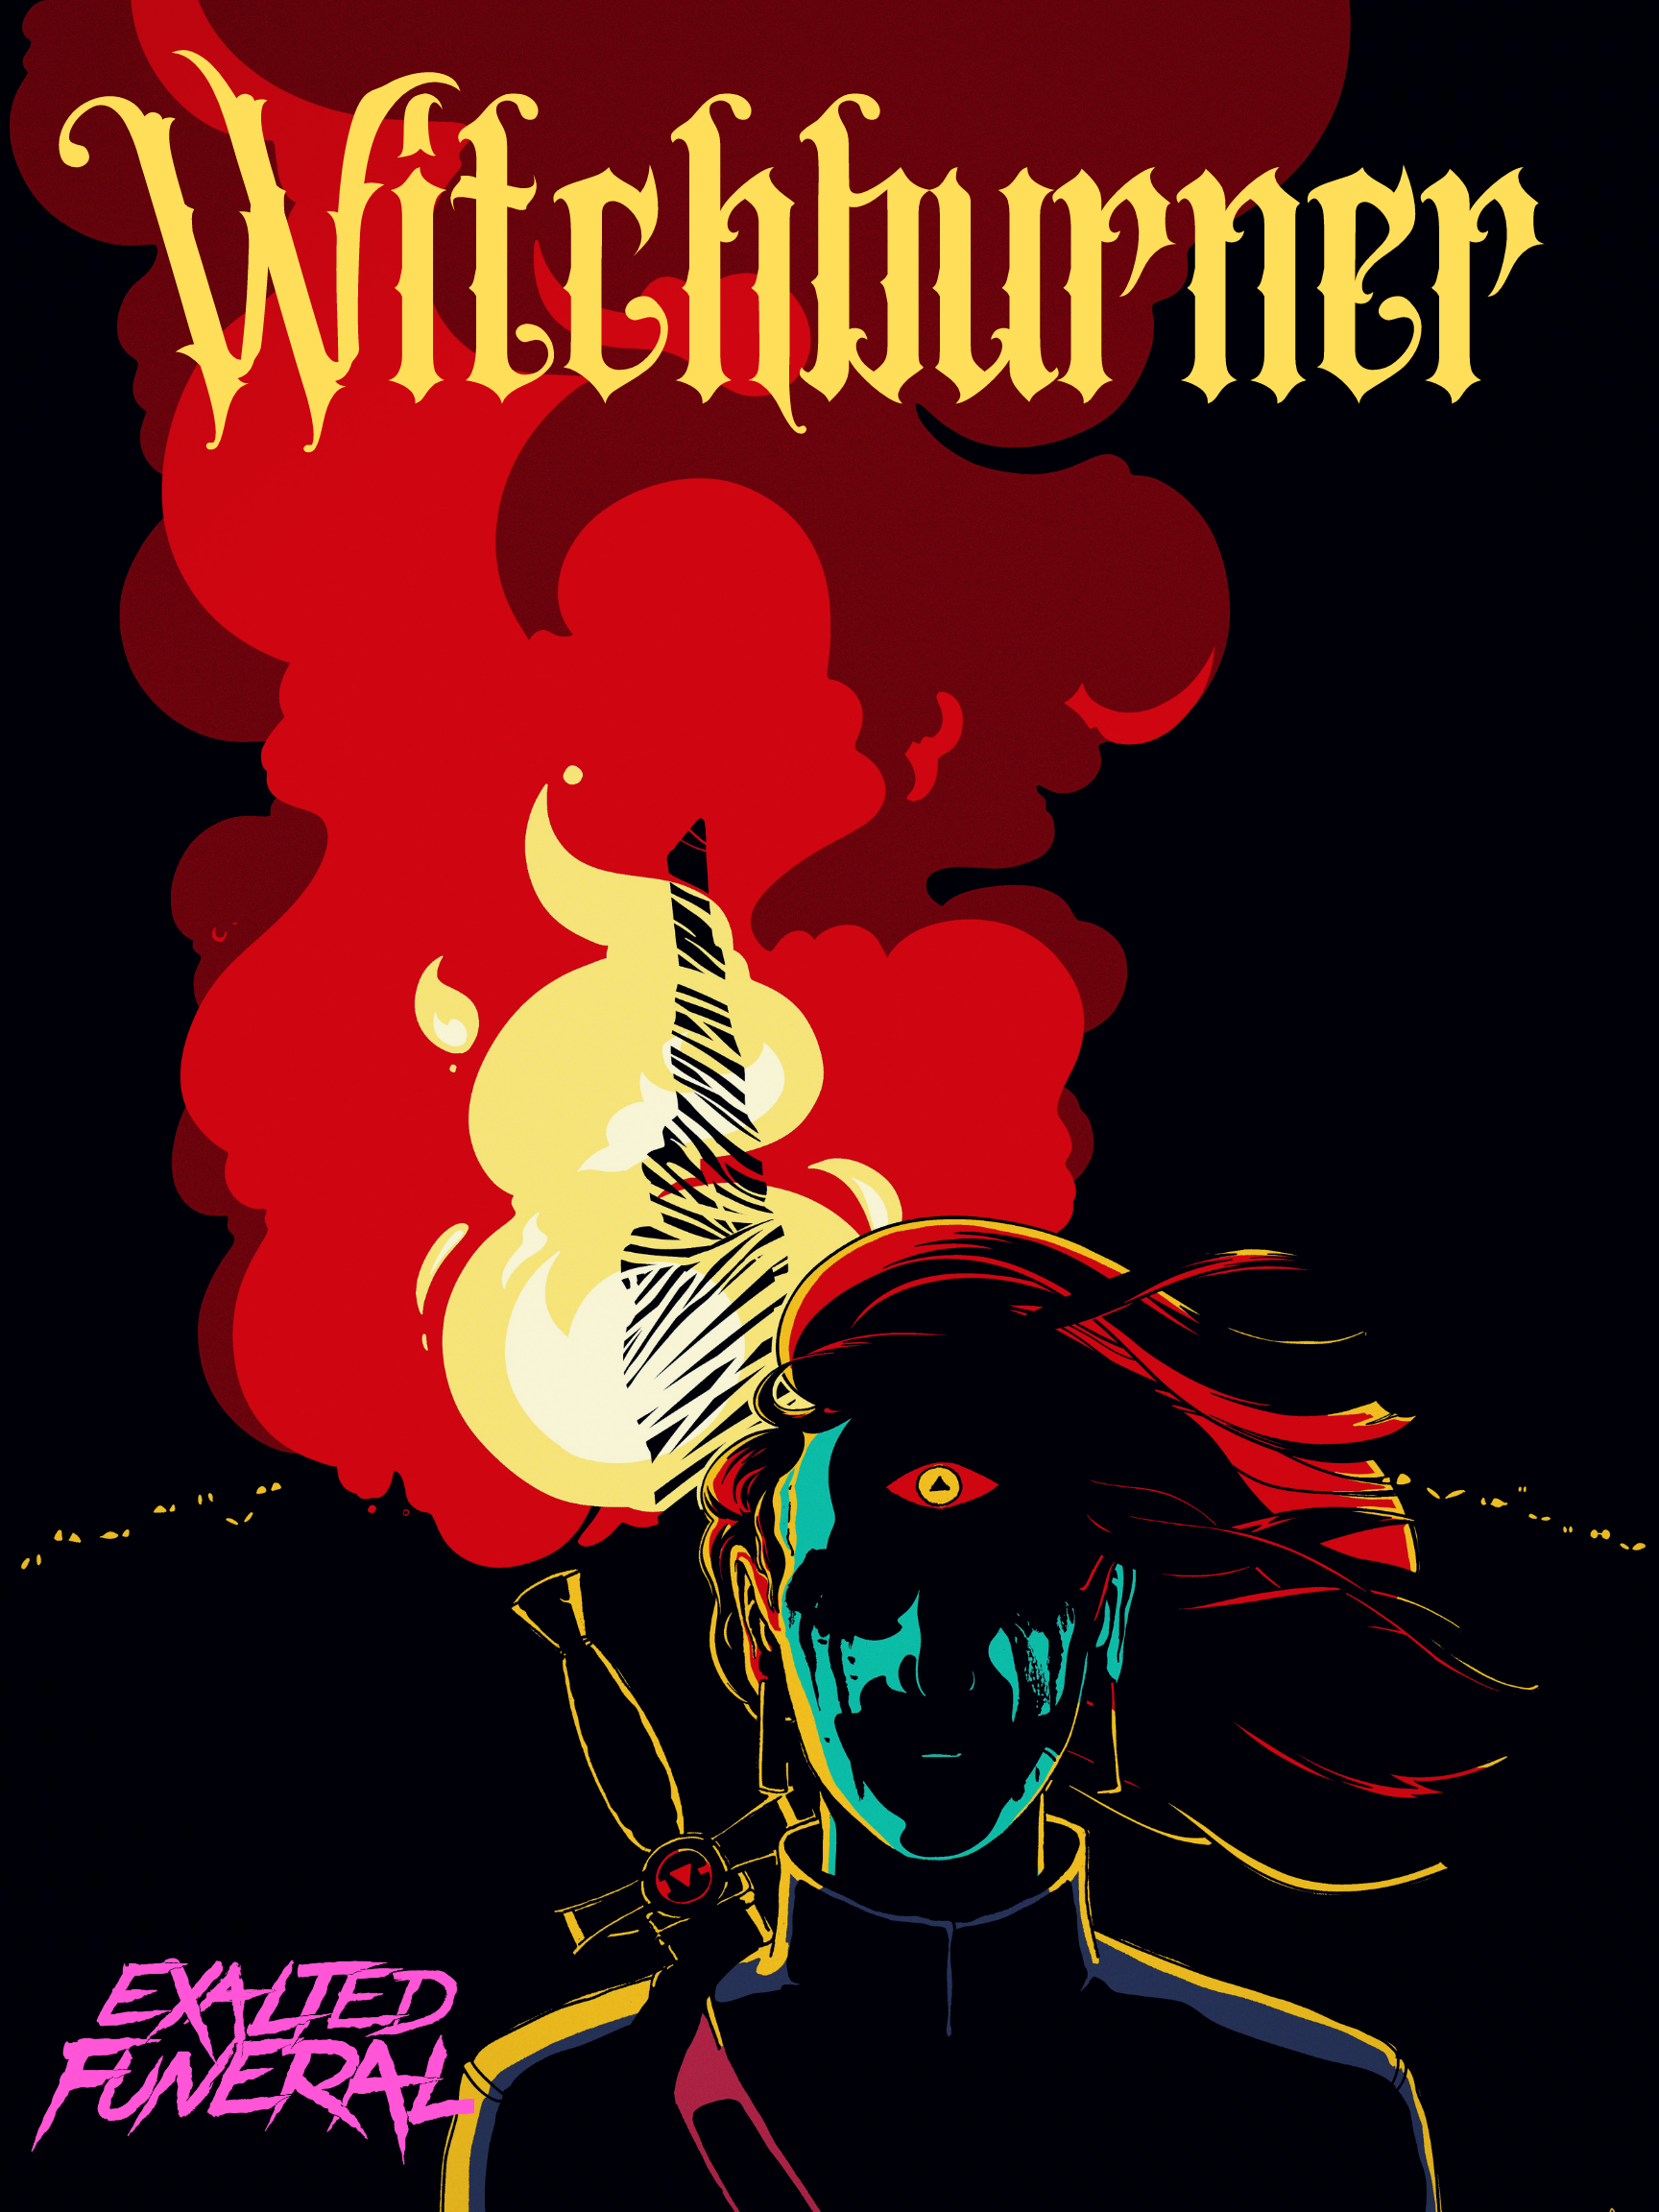 Witchburner + PDF